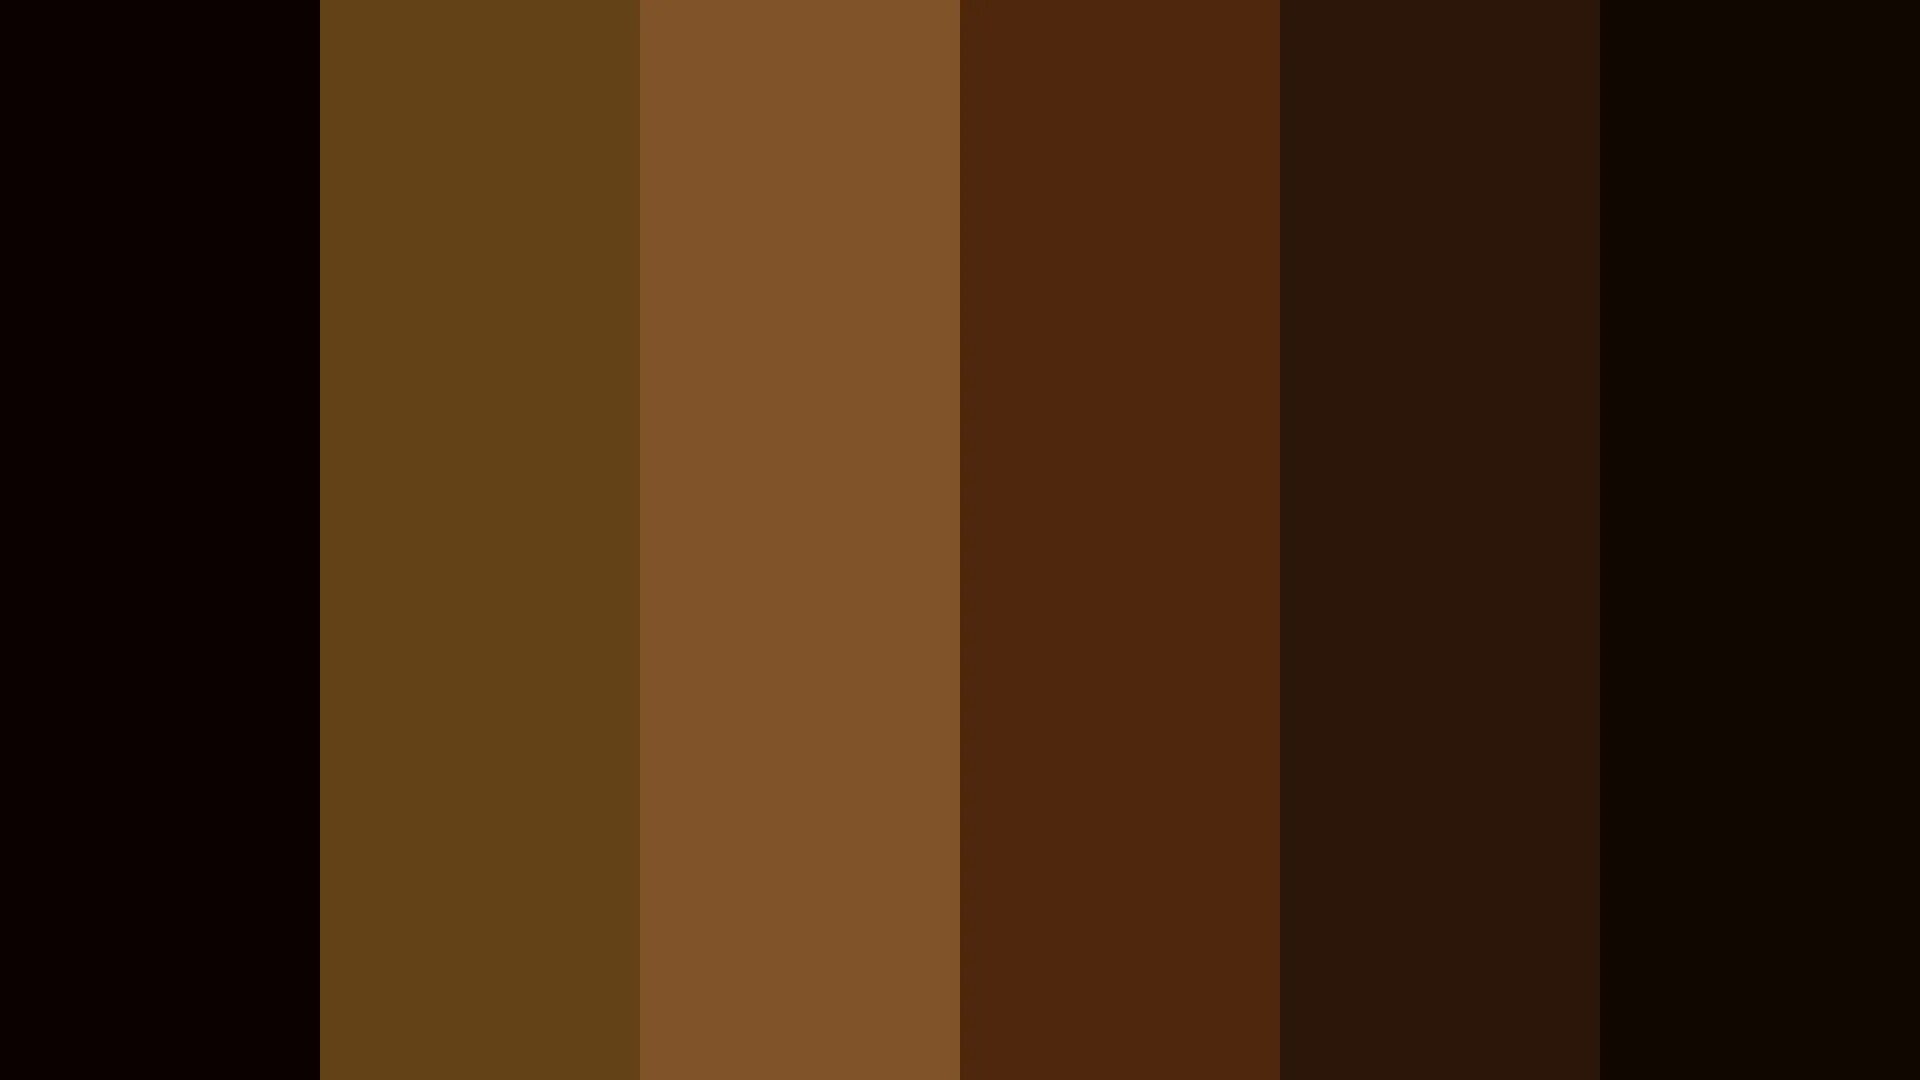 Darkest brown 2. Оттенки коричневого. Коричневые тона. Палитра коричневого цвета. Коричневый оттенки коричневого.